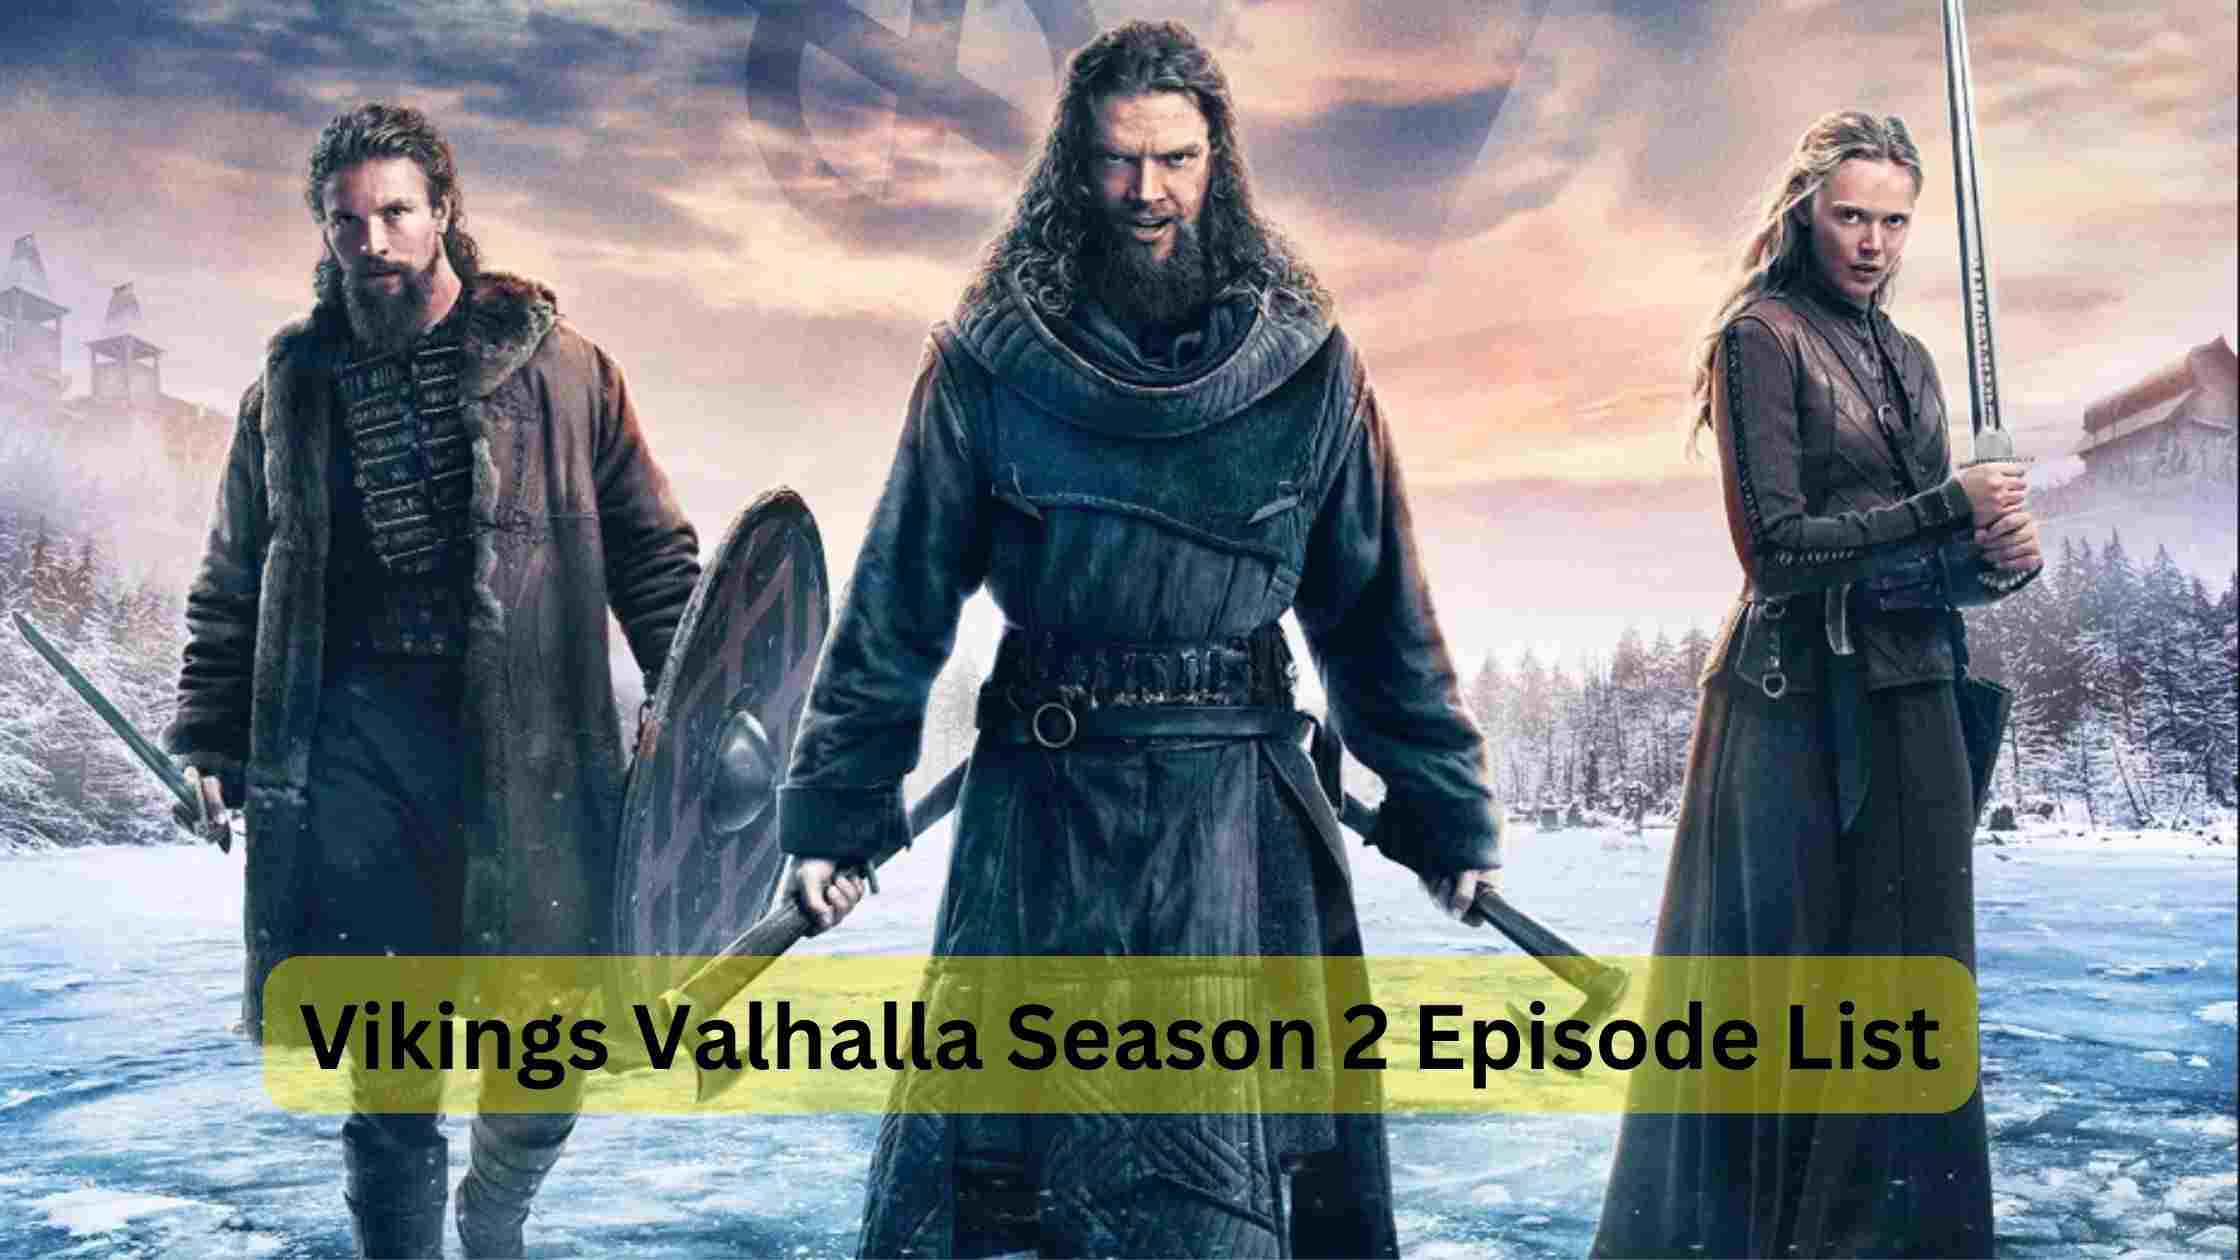 Vikings Valhalla season 2 Episode list